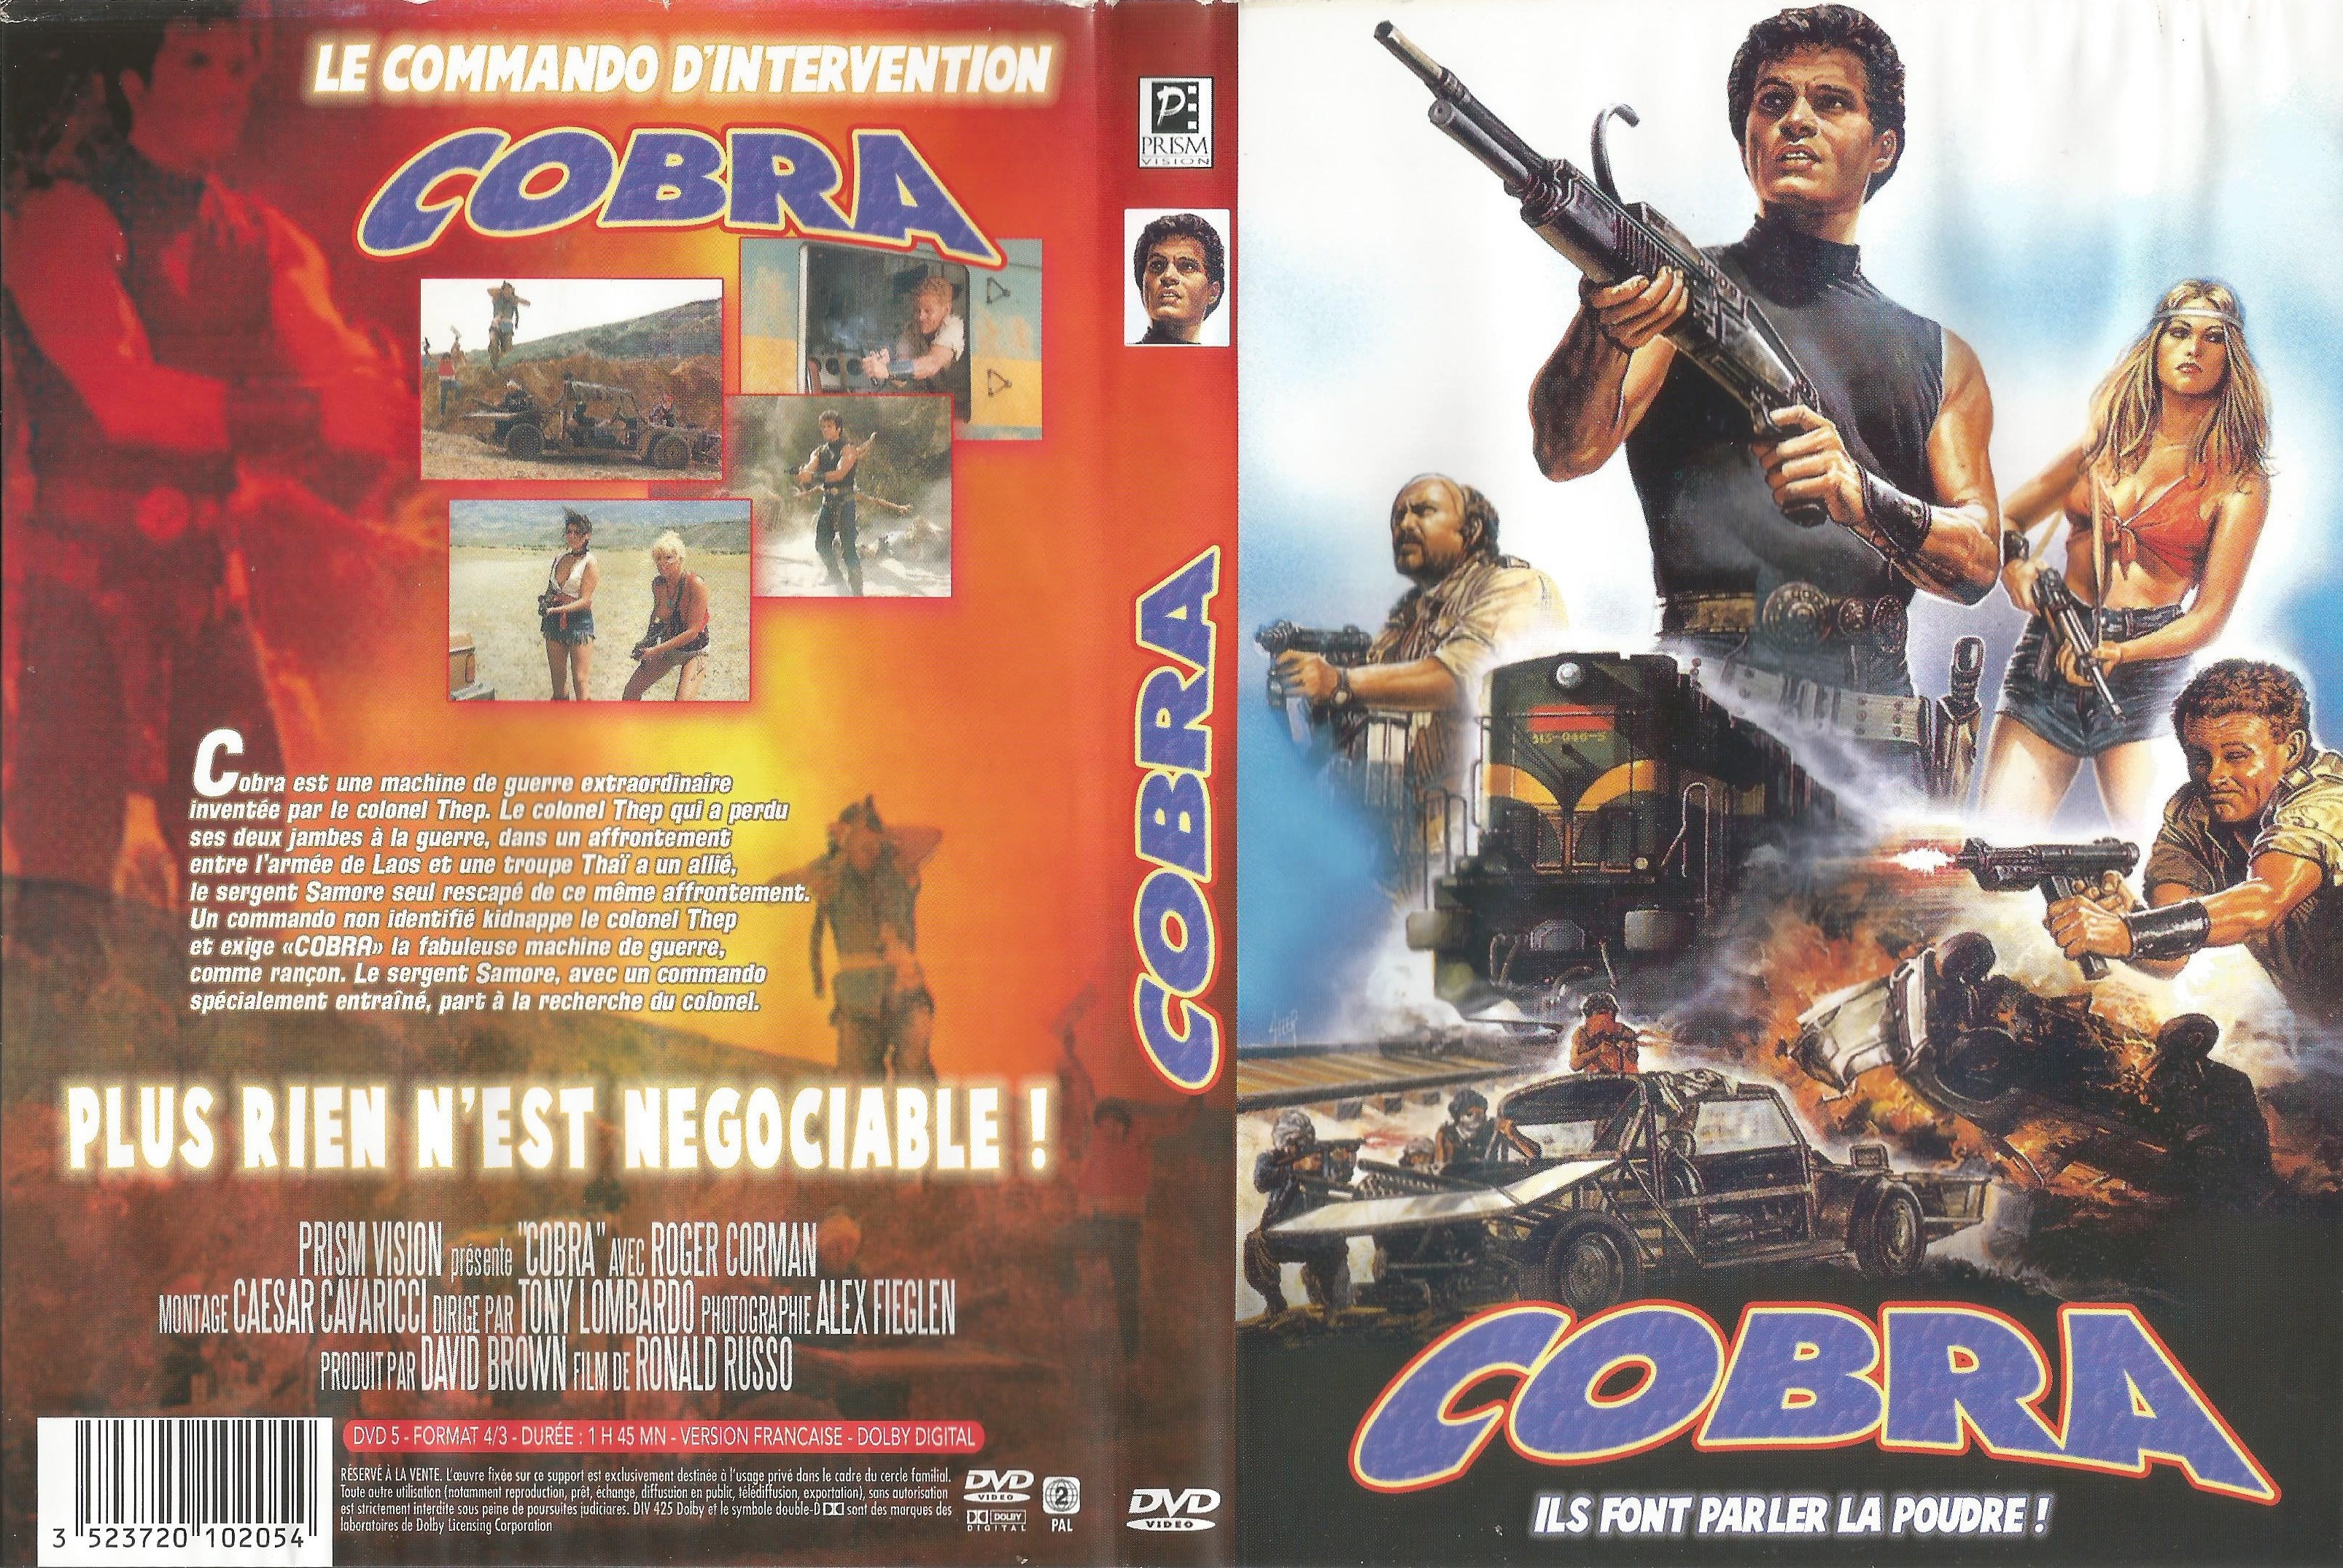 Jaquette DVD Cobra Fire